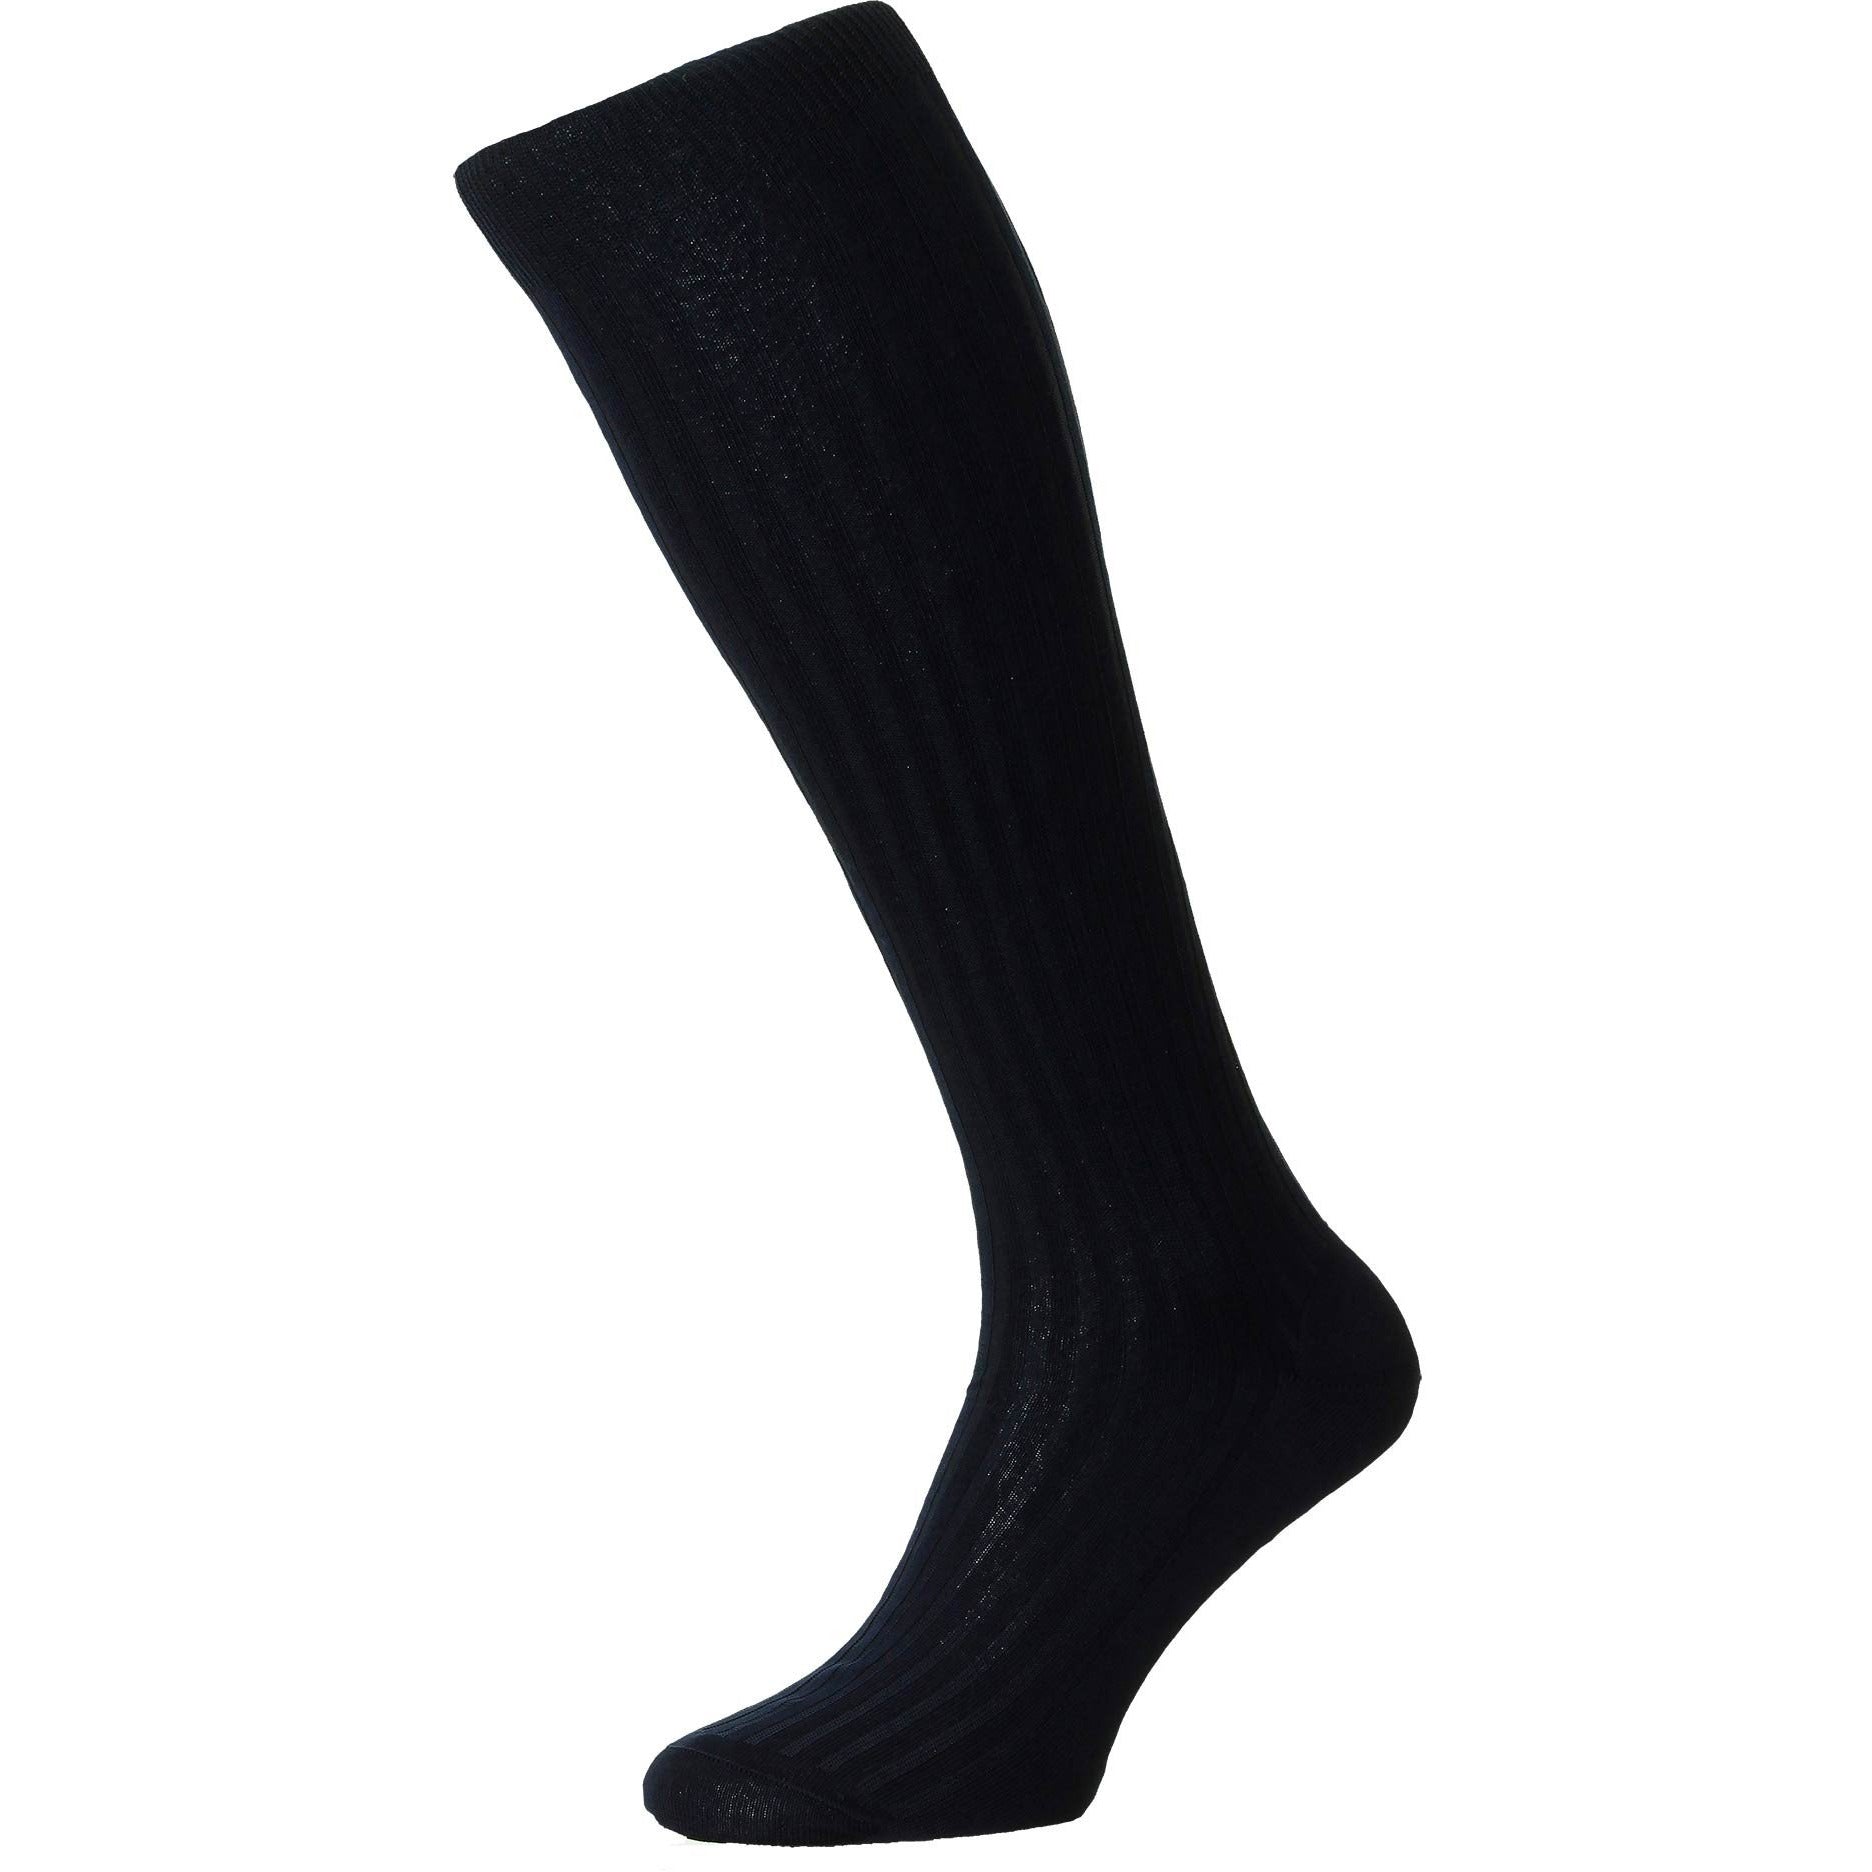 Danvers 5x3 Rib Cotton Lisle Over the Calf Dress Socks